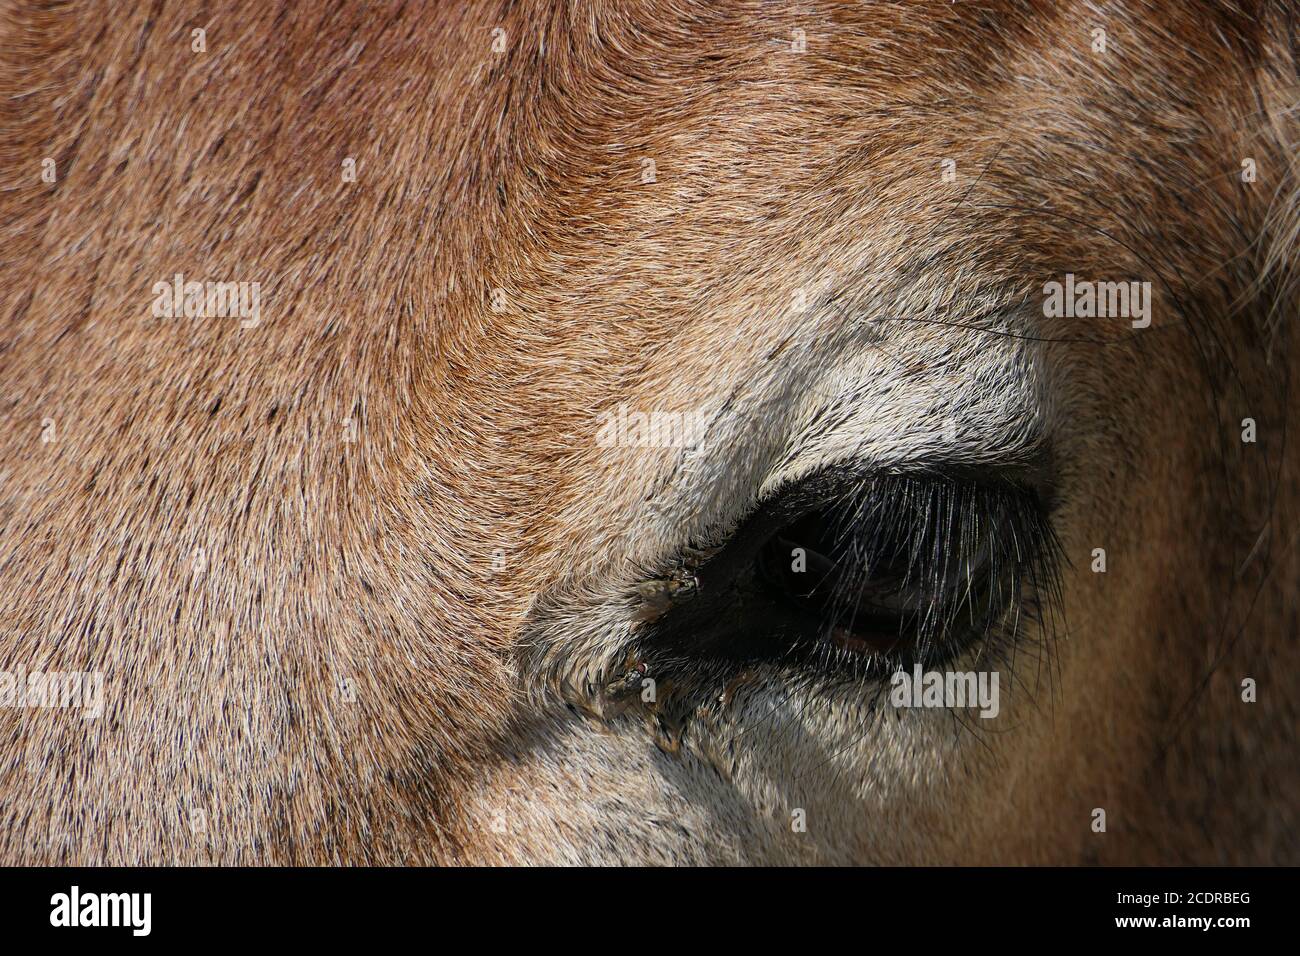 Closeup eye of a beautiful brown cow Stock Photo